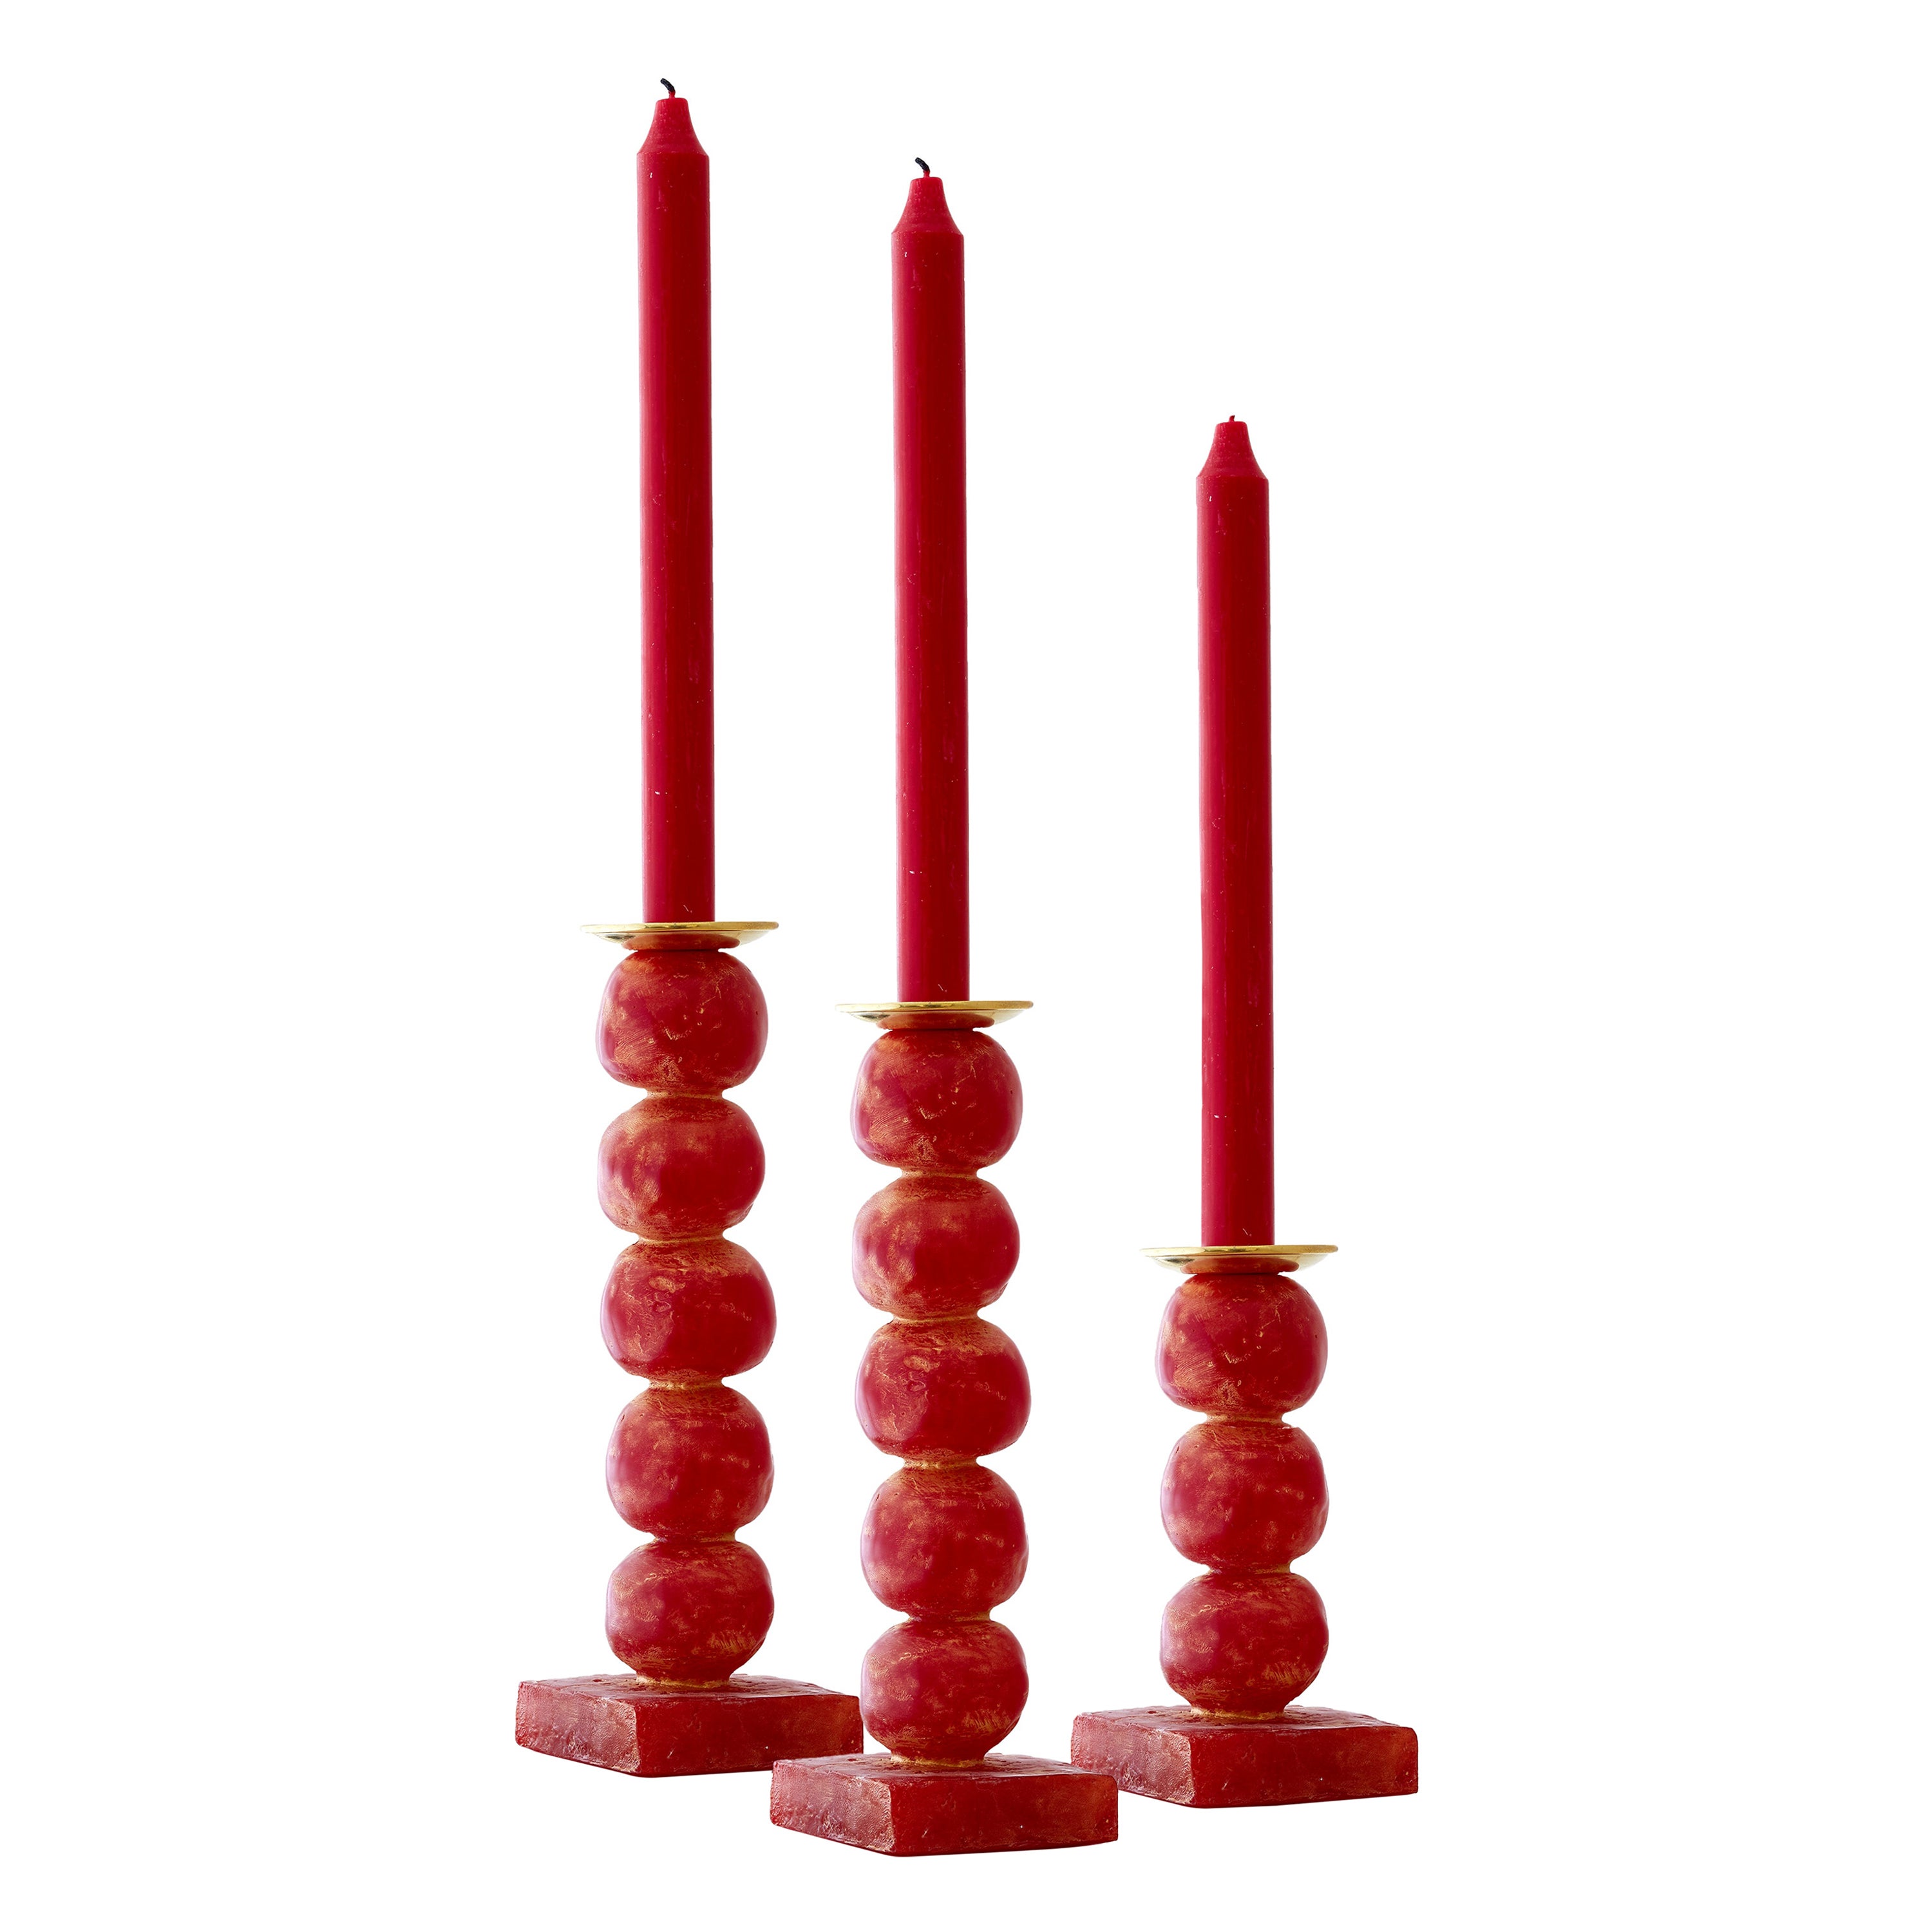 European Contemporary Red Sculptural Candlesticks by Margit Wittig